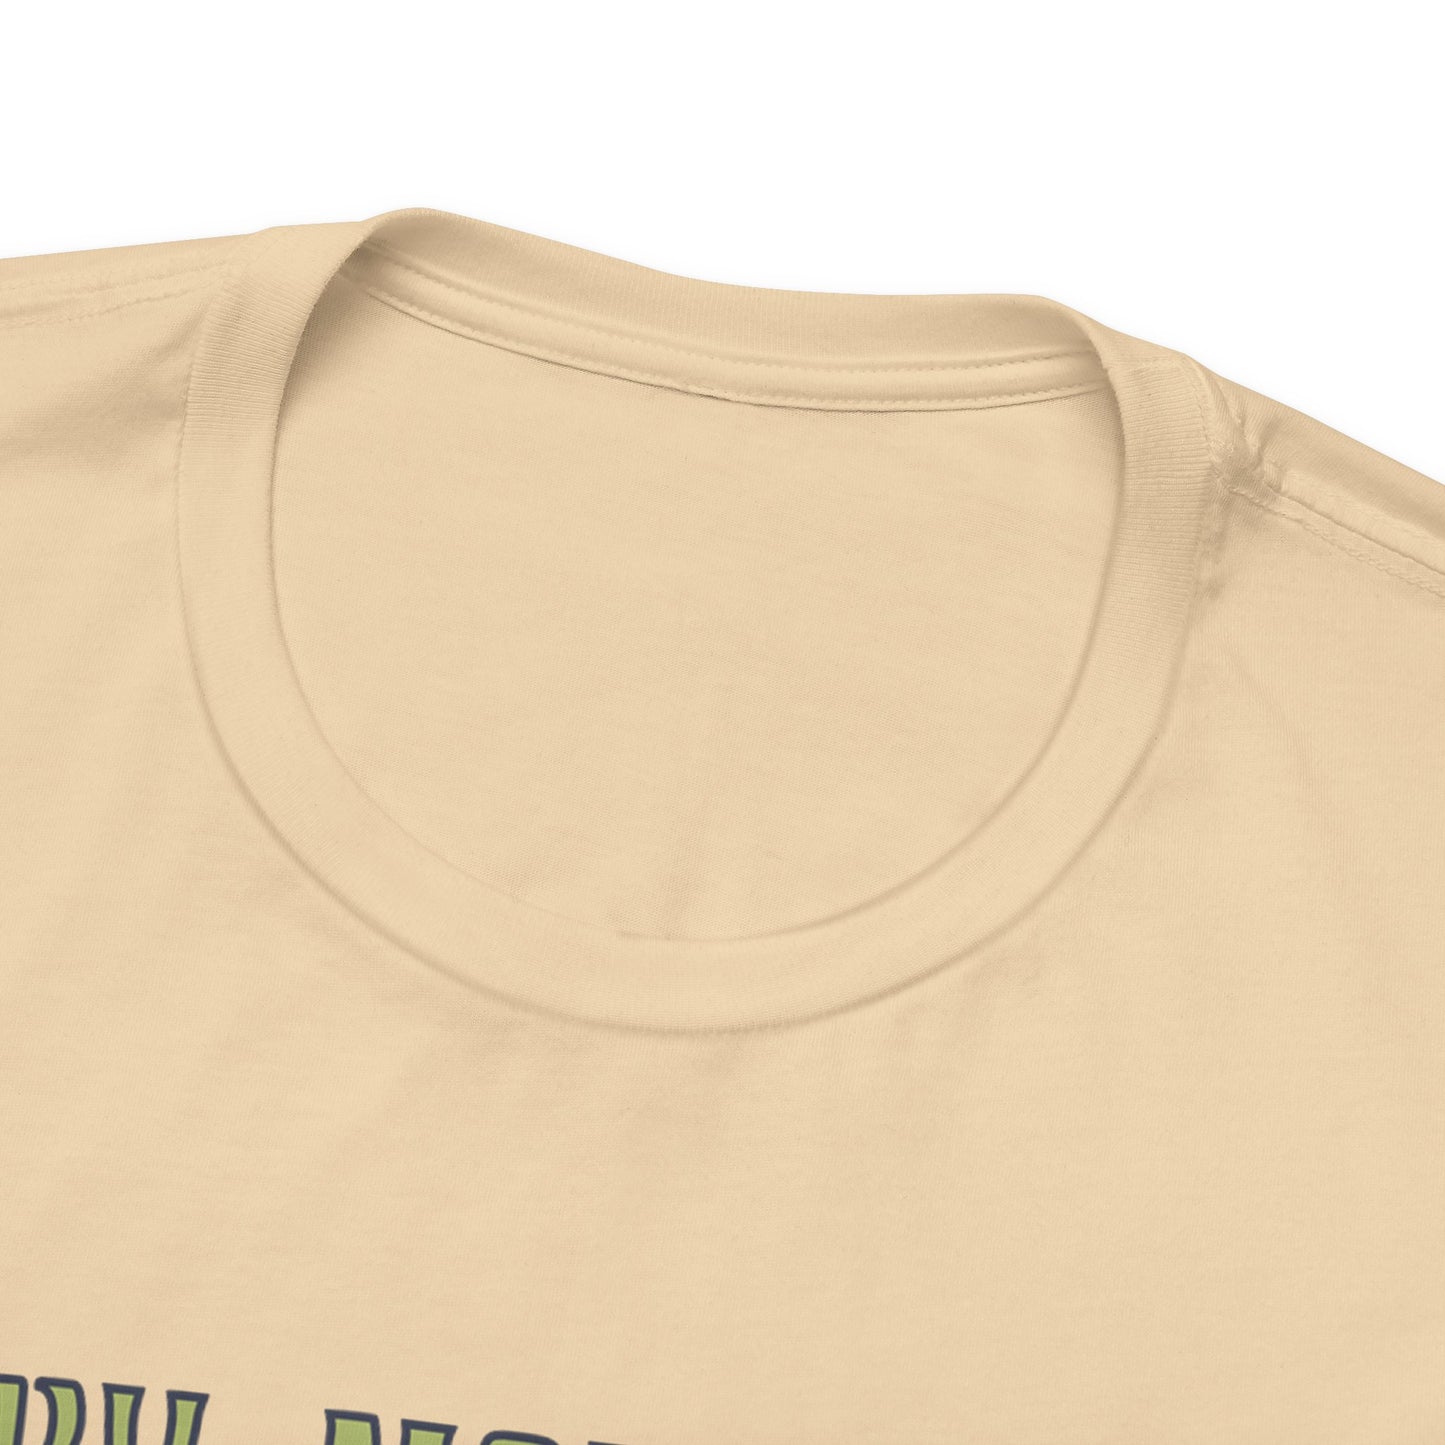 Rocky Mountain Rangers - T-Shirt